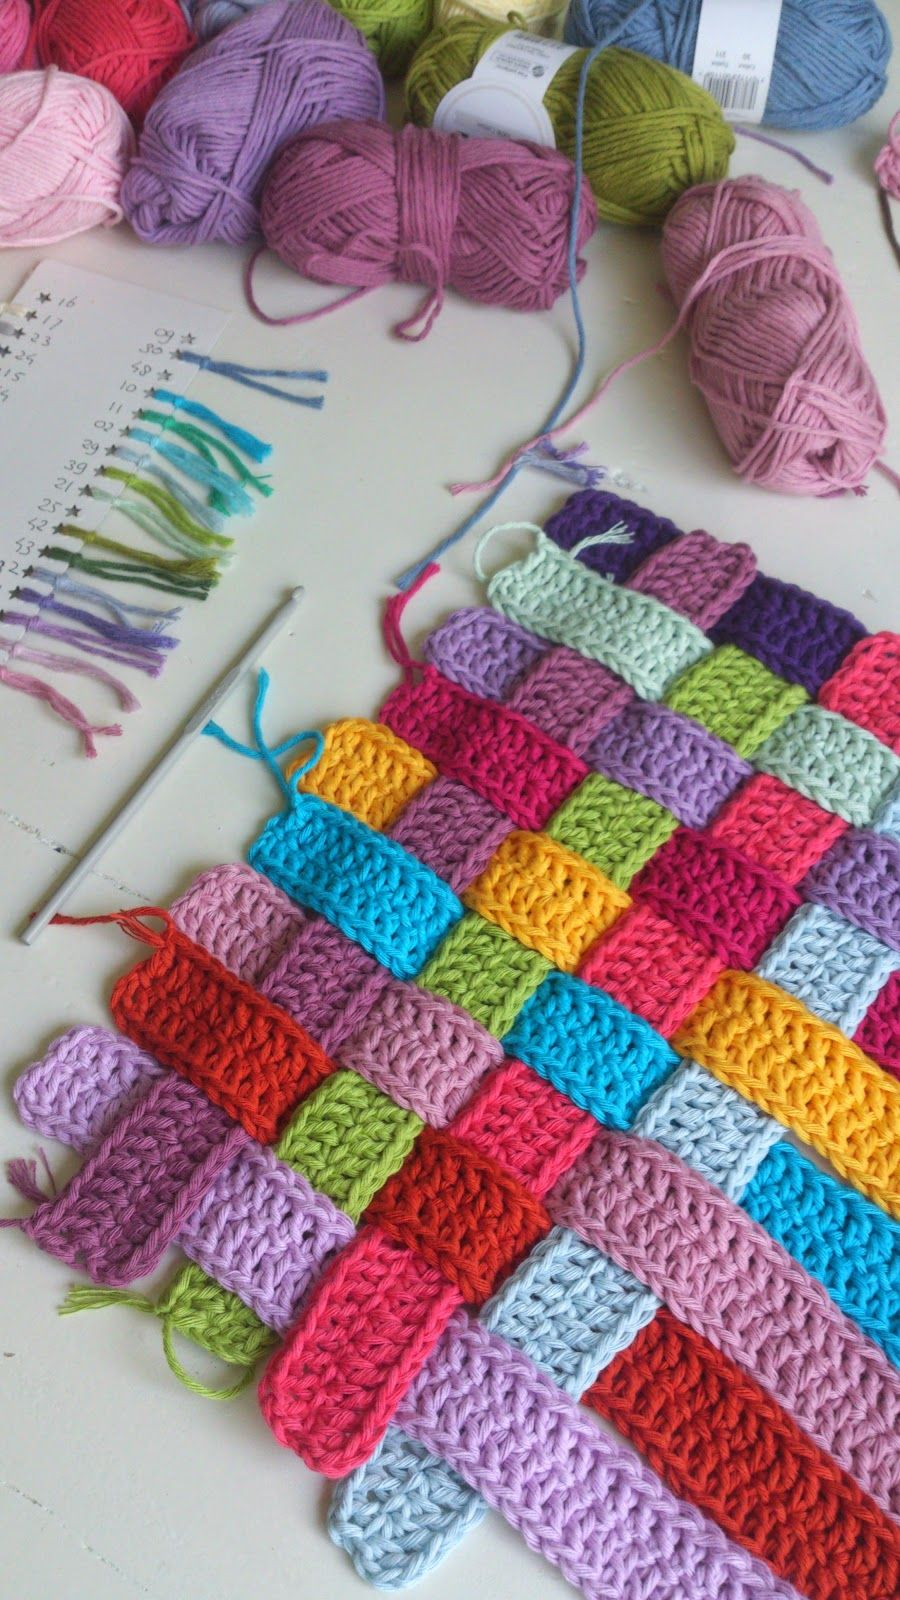 Crochet Weave Blanket Pattern Basket Weave Crochet Strips Bench Cover Photo Tutorial Afghan